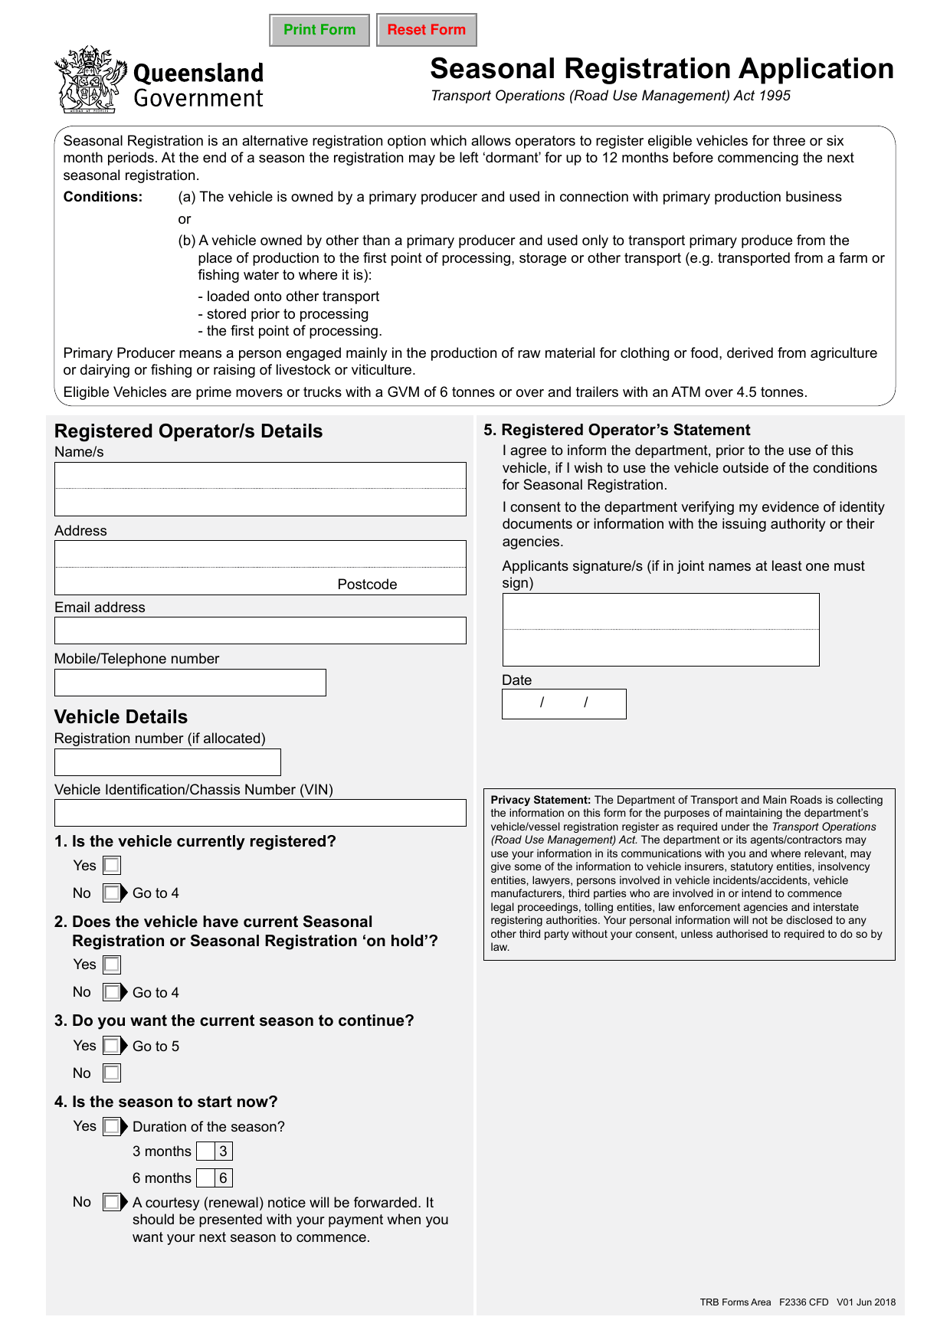 Form F2336 Seasonal Registration Application - Queensland, Australia, Page 1